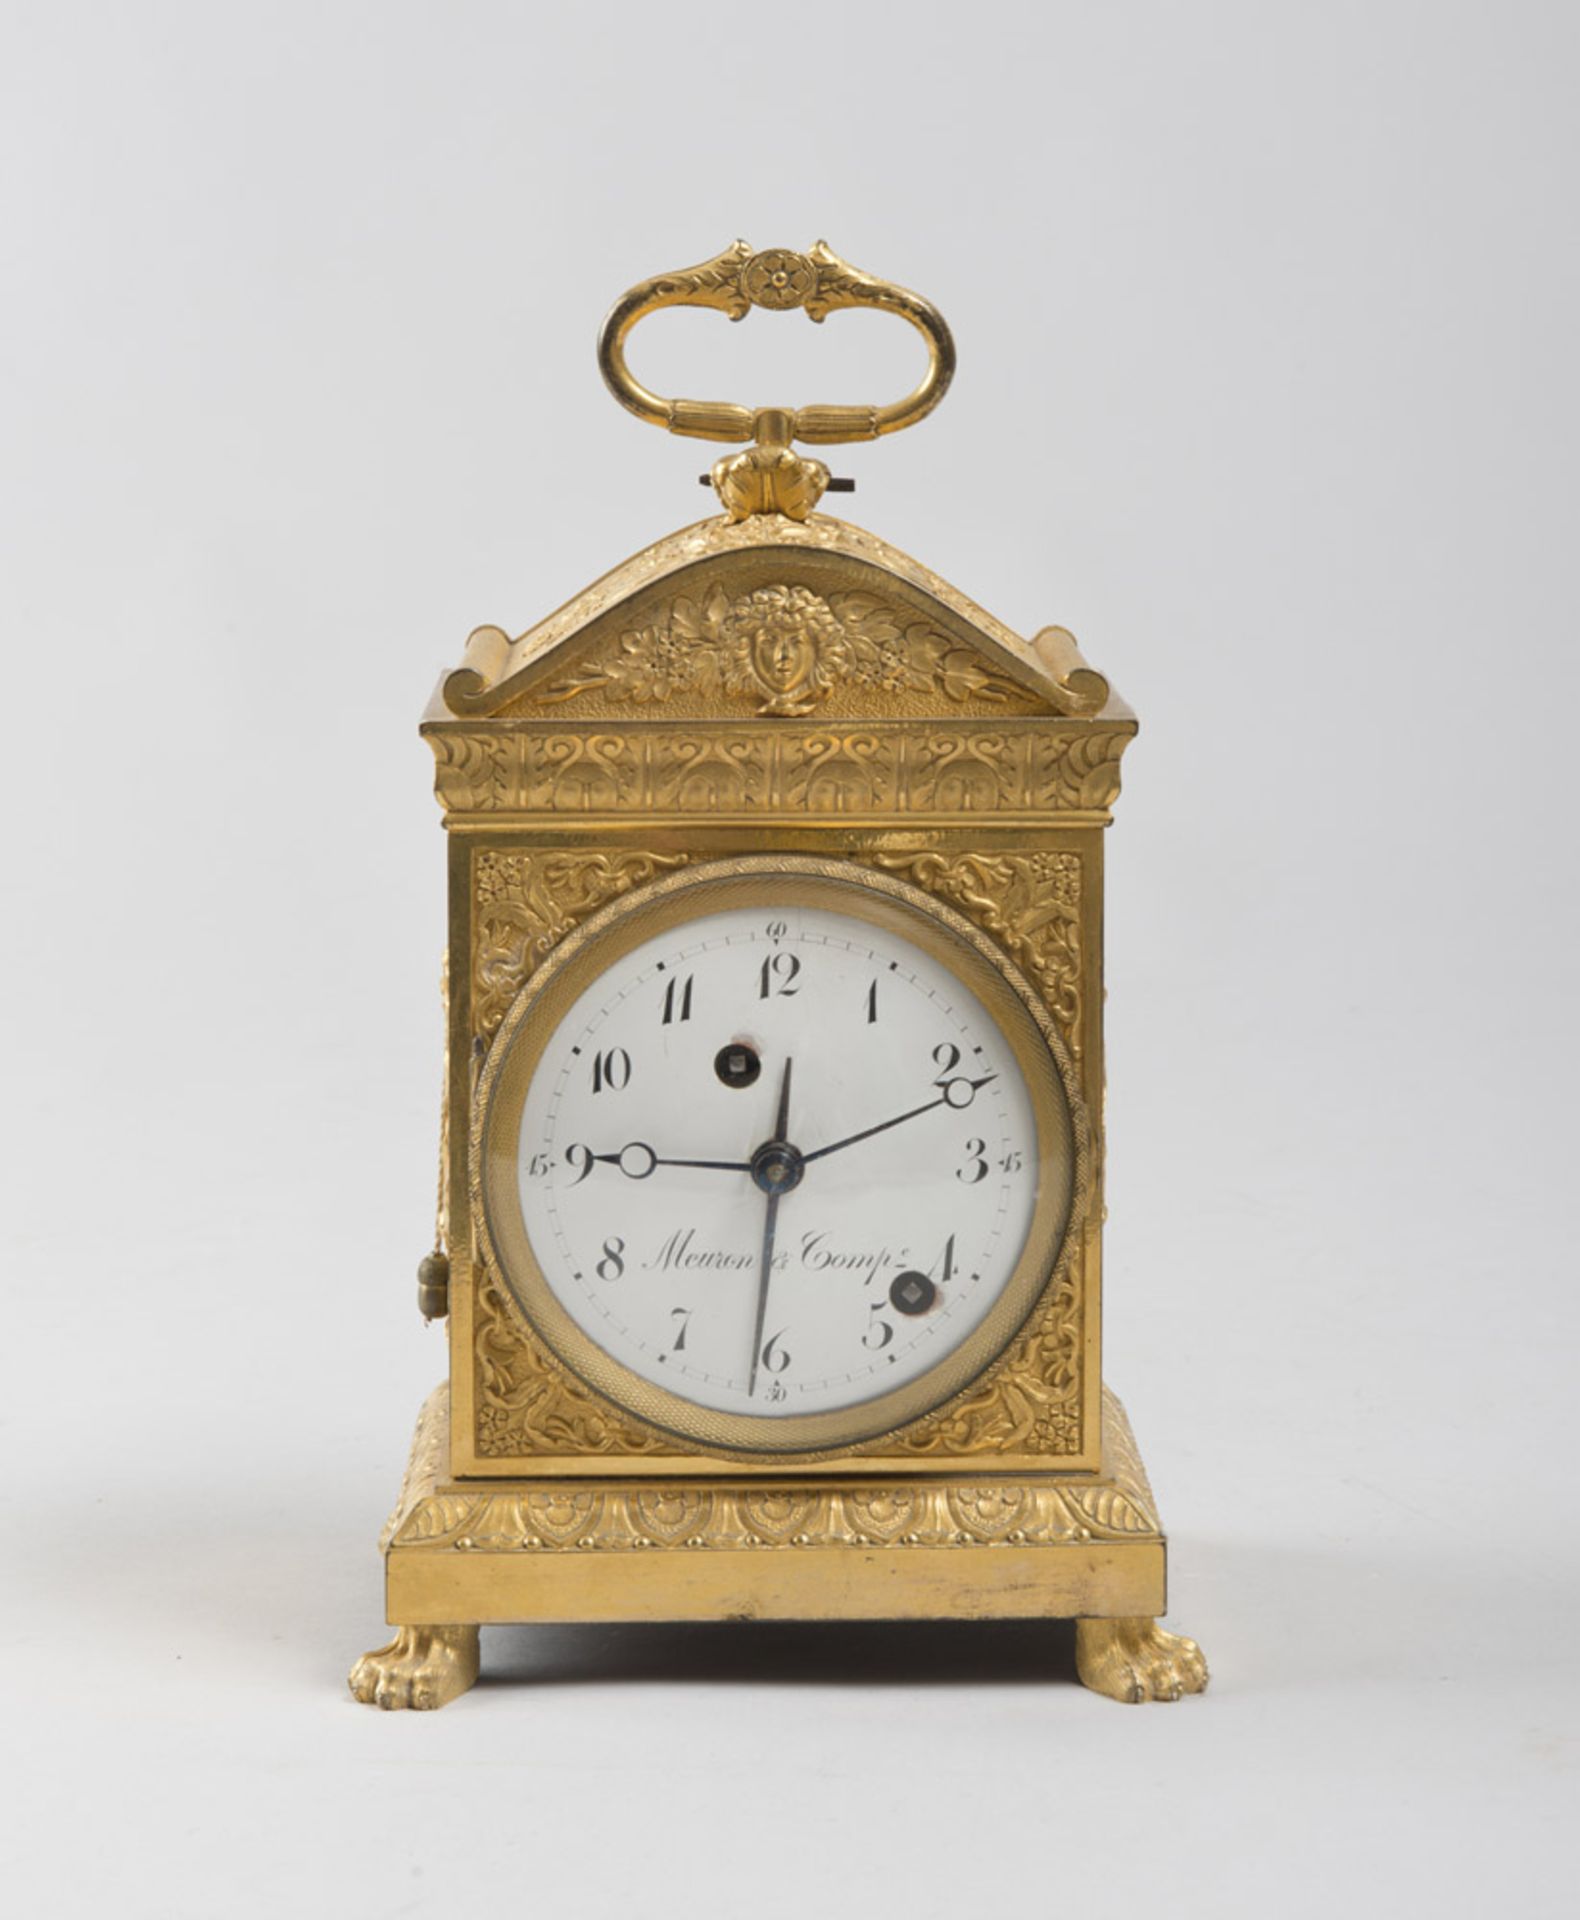 GILT BRONZE TABLE CLOCK, LATE 18TH CENTURY White enamel dial, marked 'Meuron & Comp'. 'Ainè